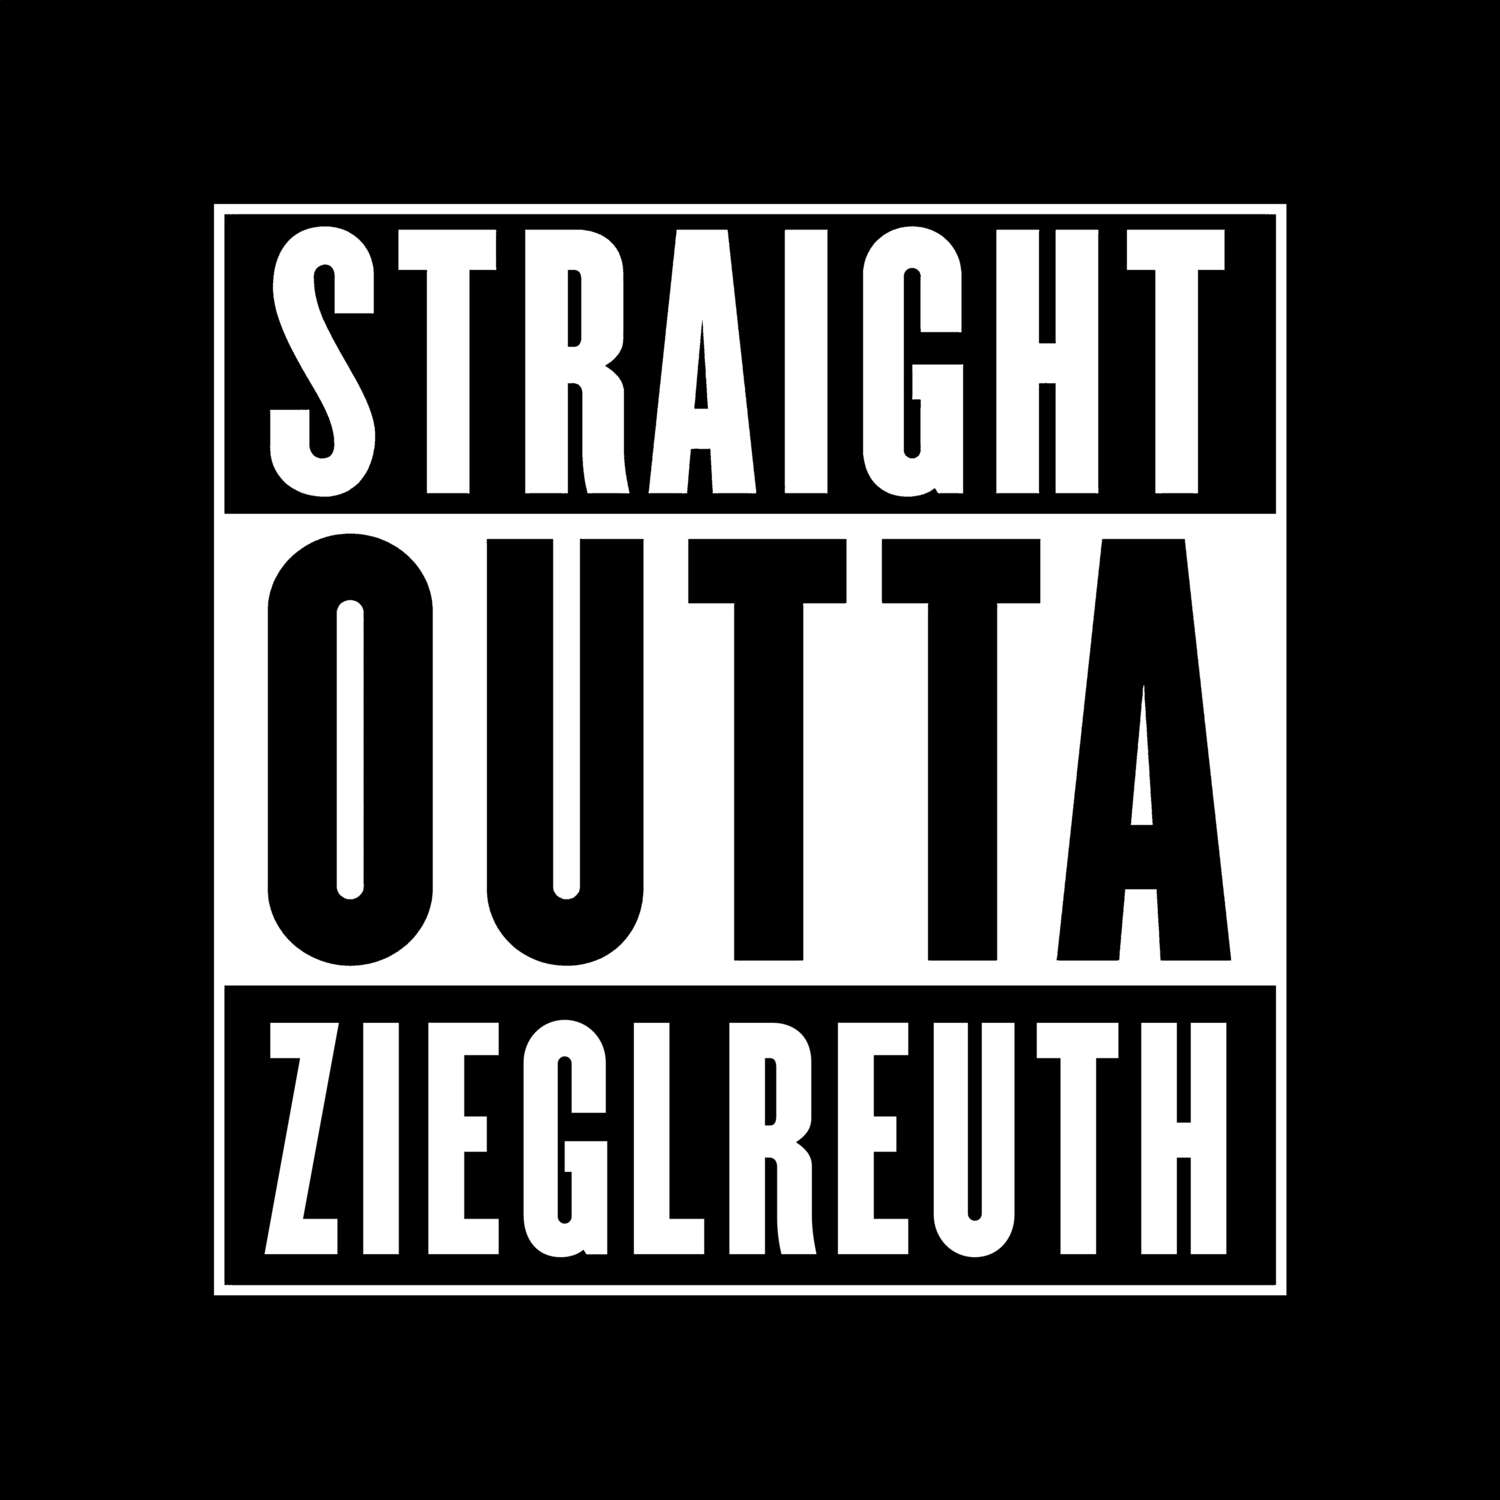 Zieglreuth T-Shirt »Straight Outta«